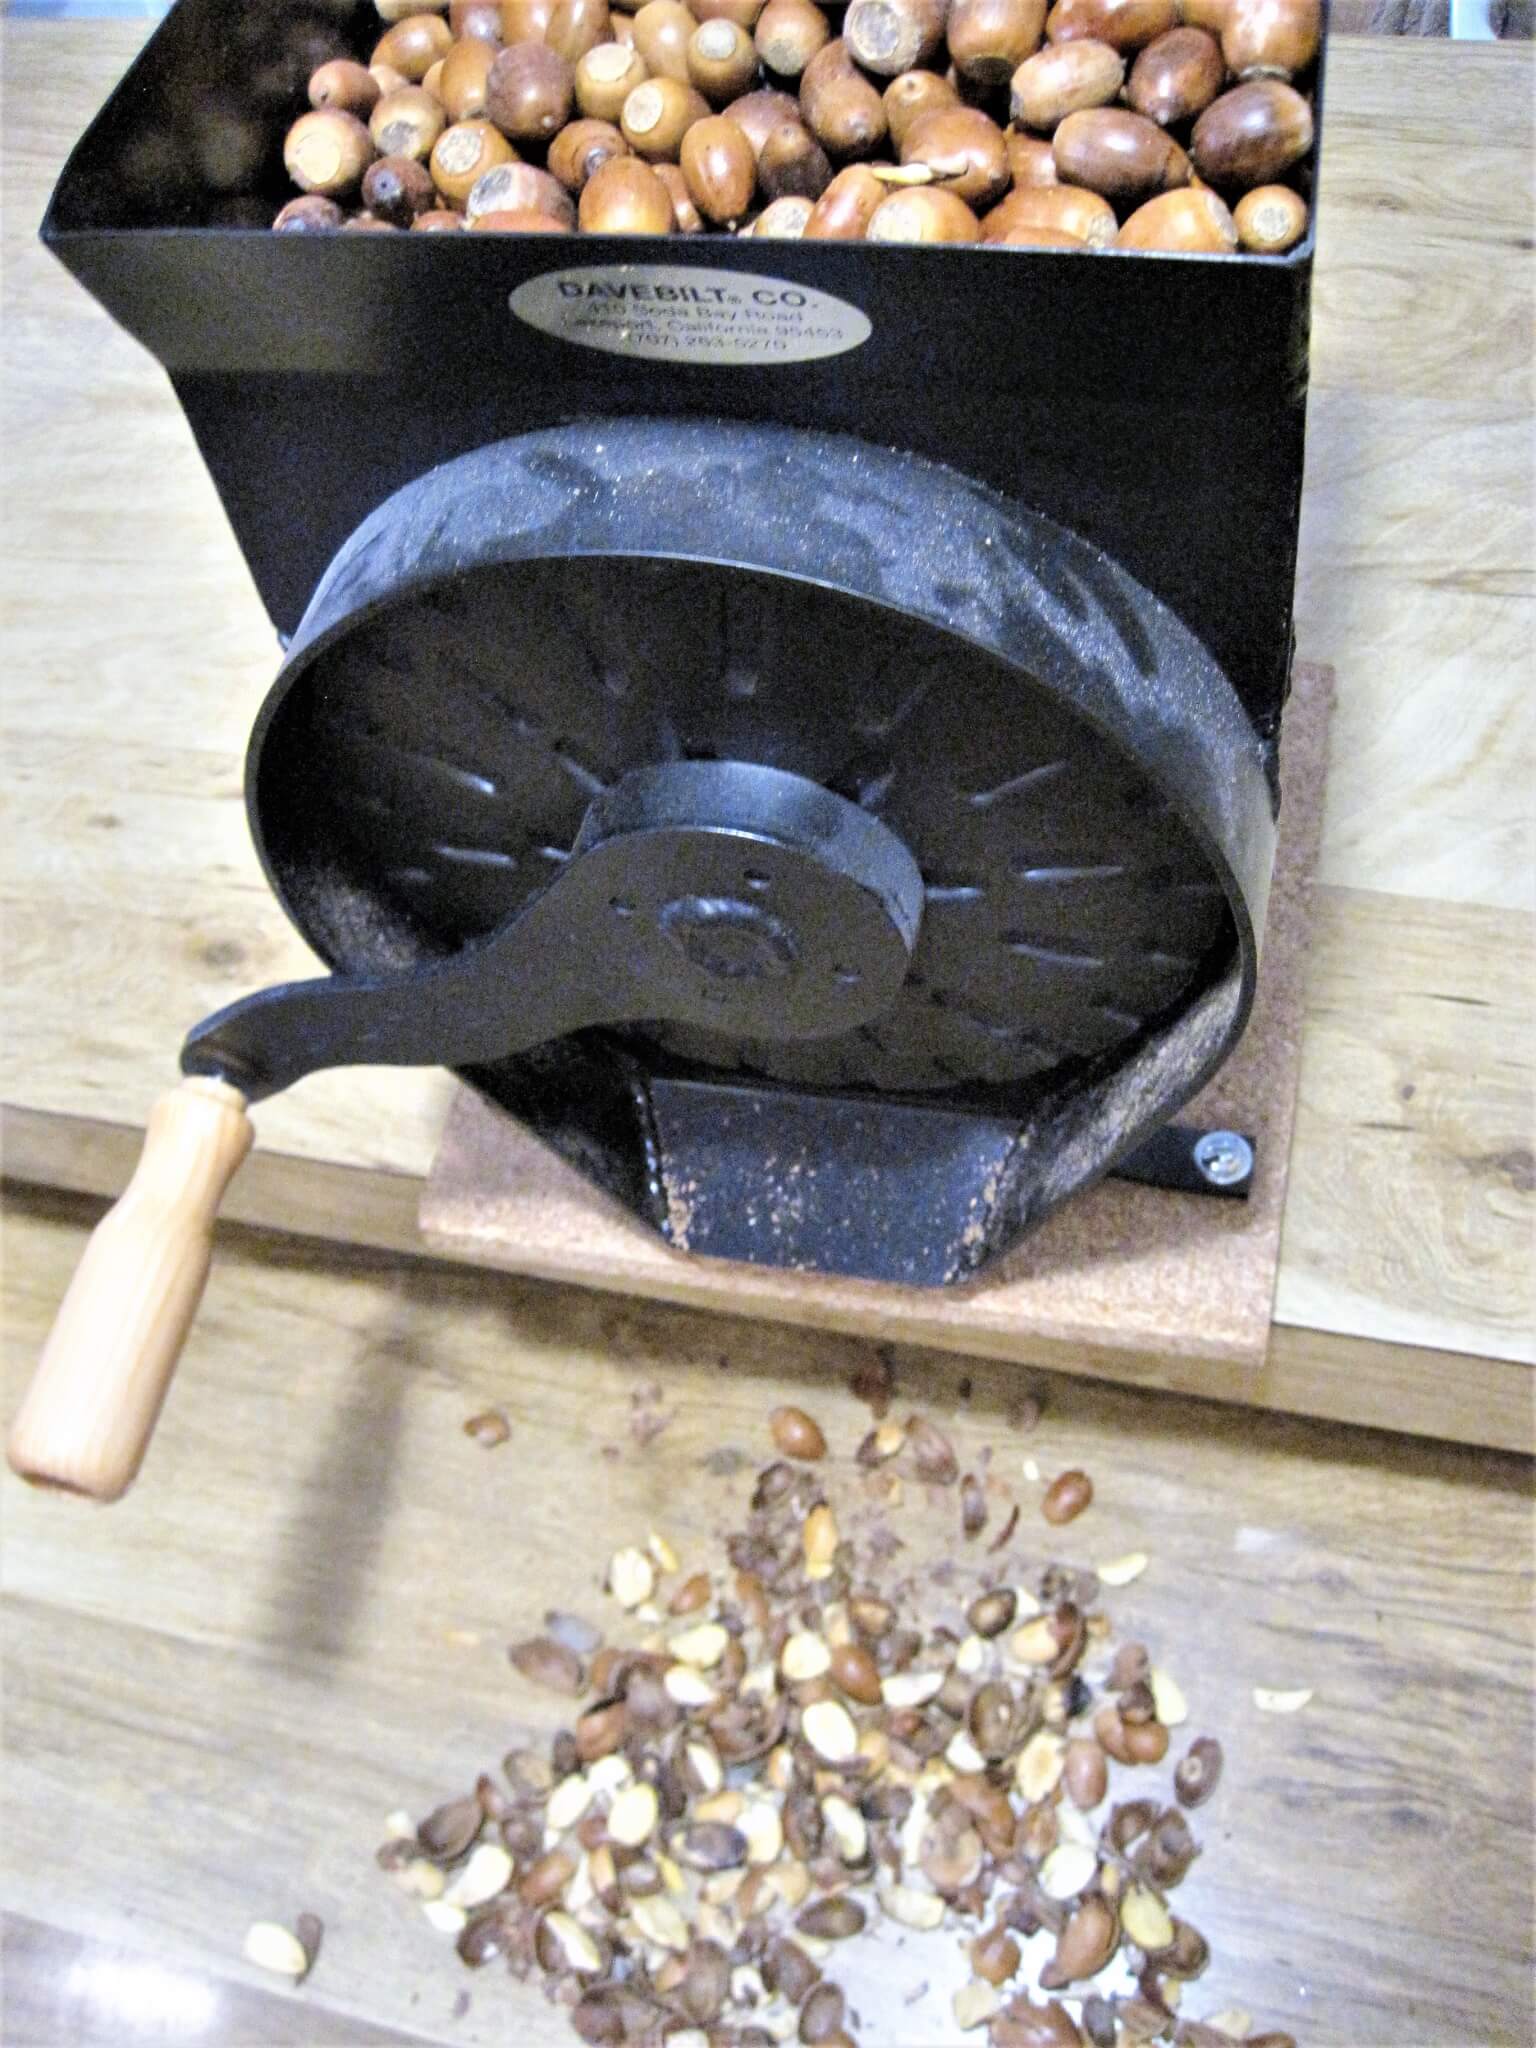 grinding acorns